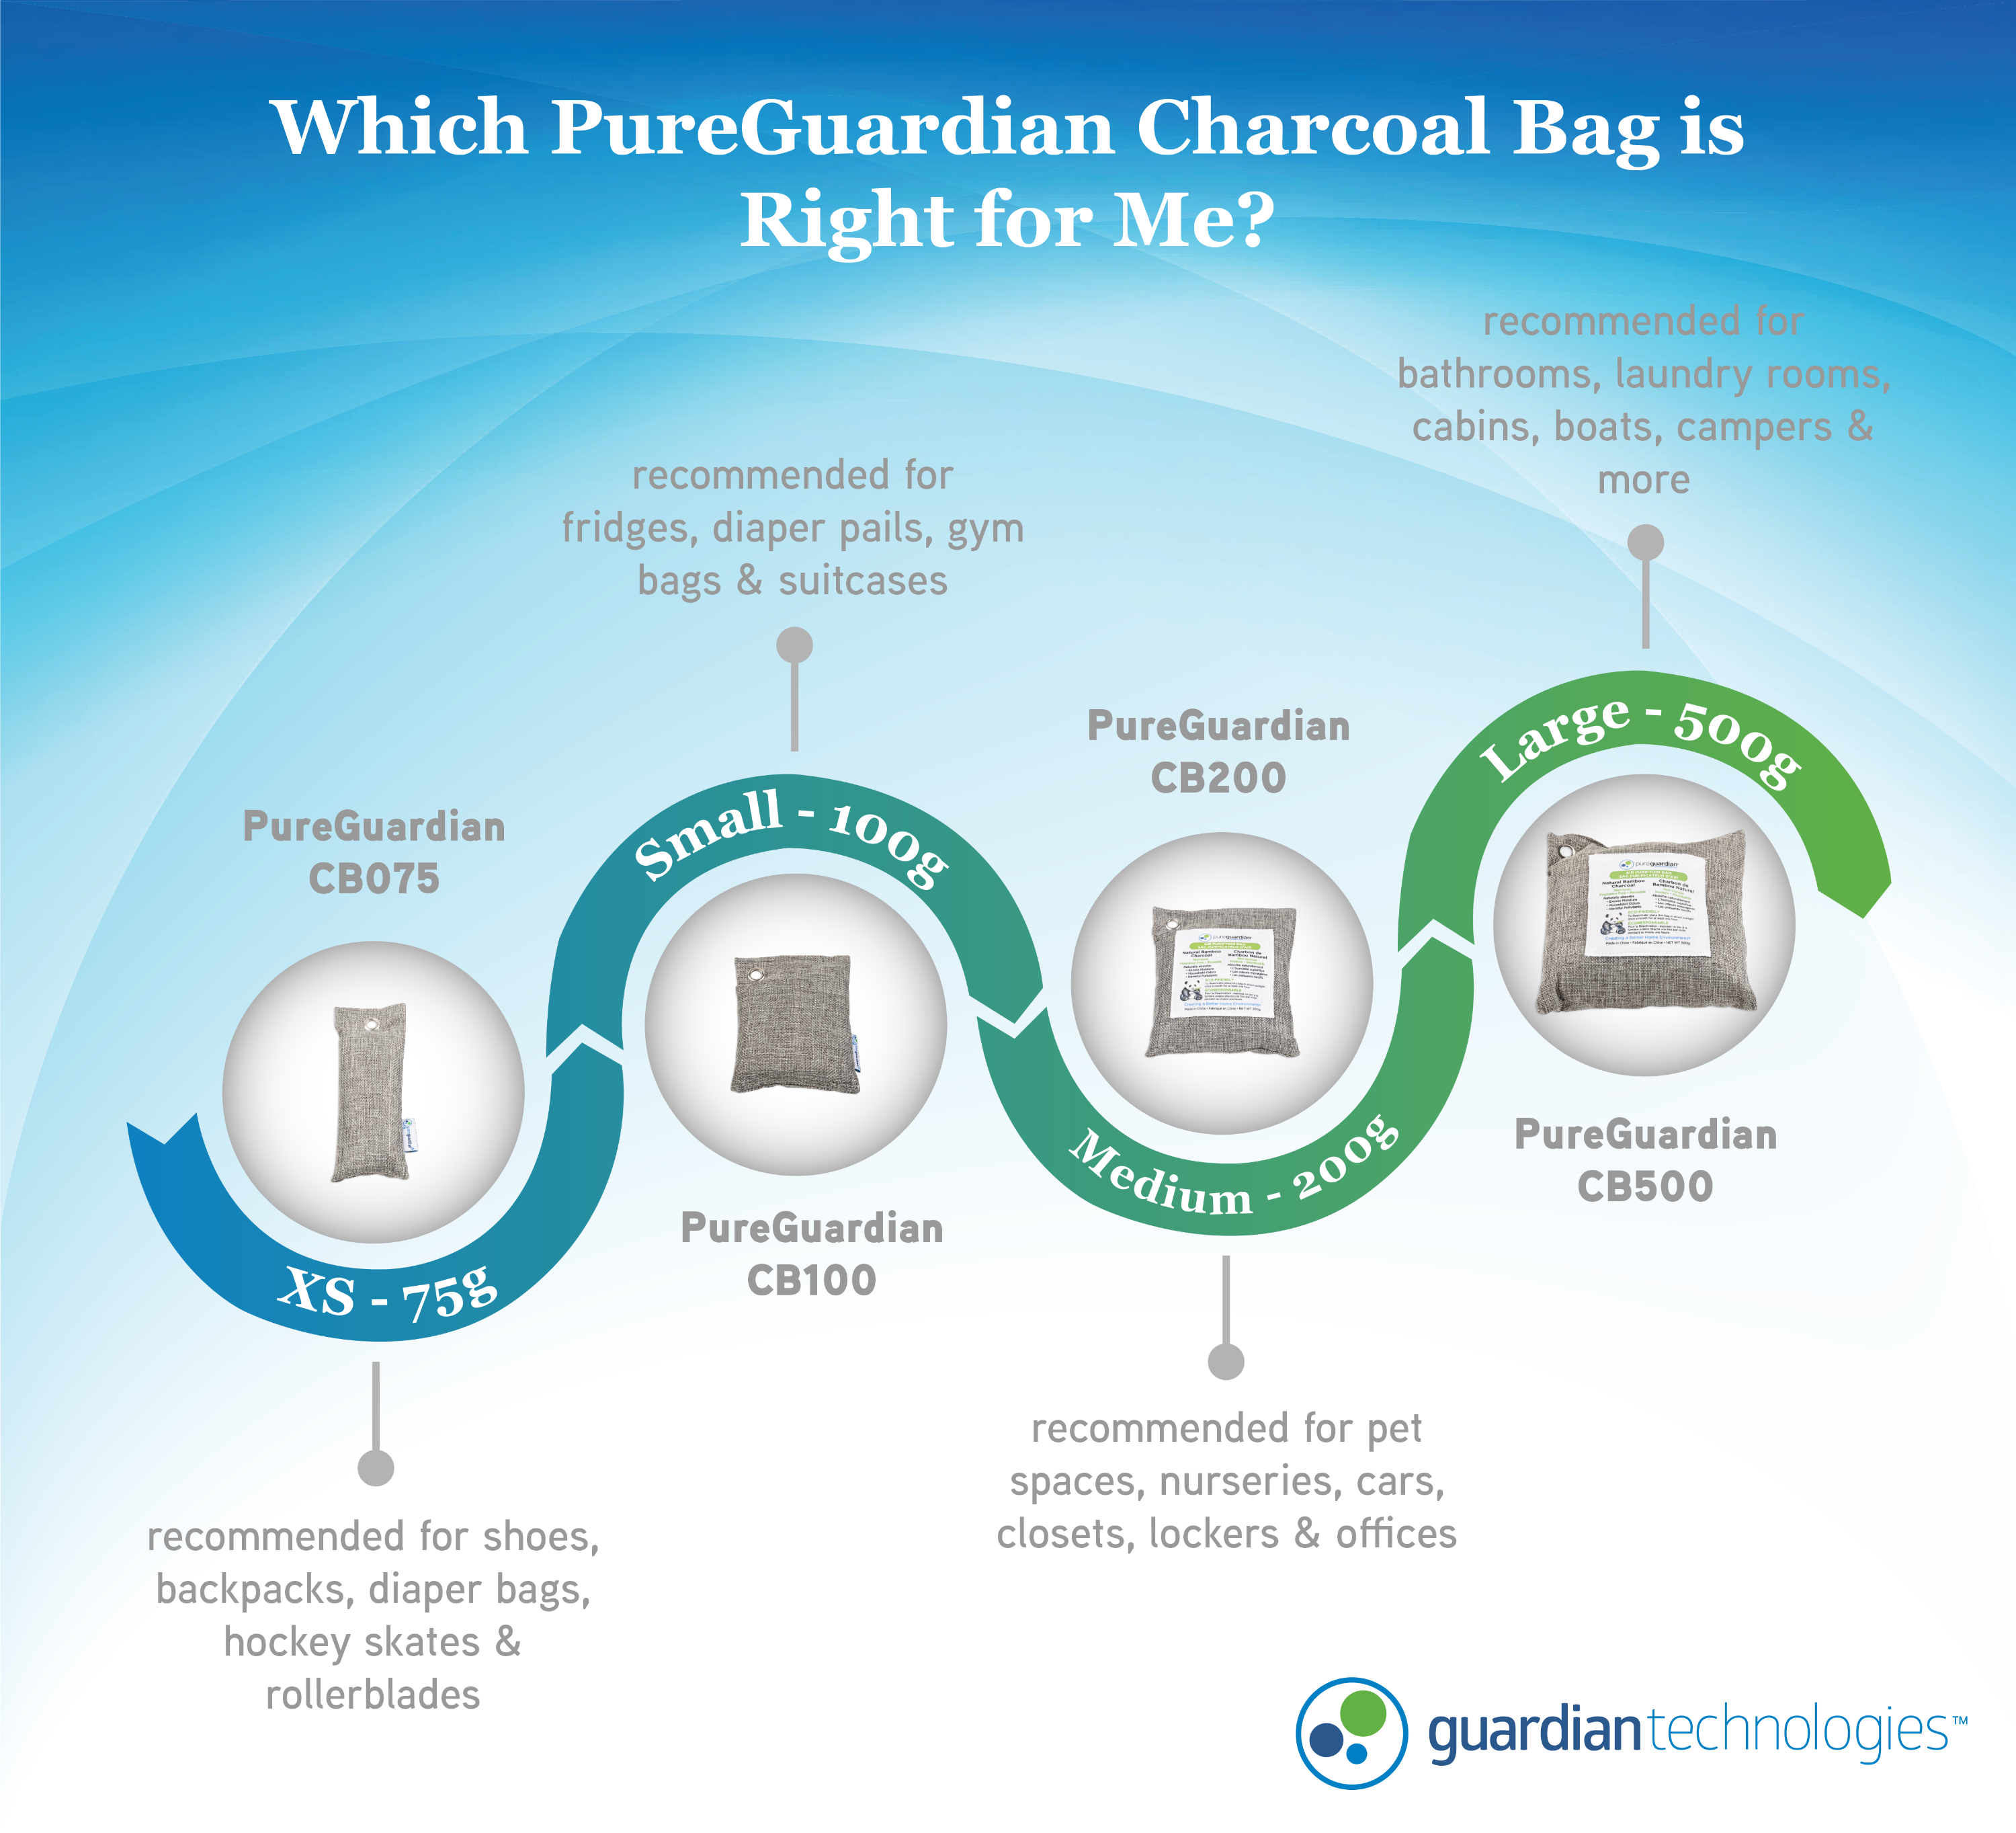 PureGuardian CB500 Bamboo Charcoal 500g Air Purifying Bag